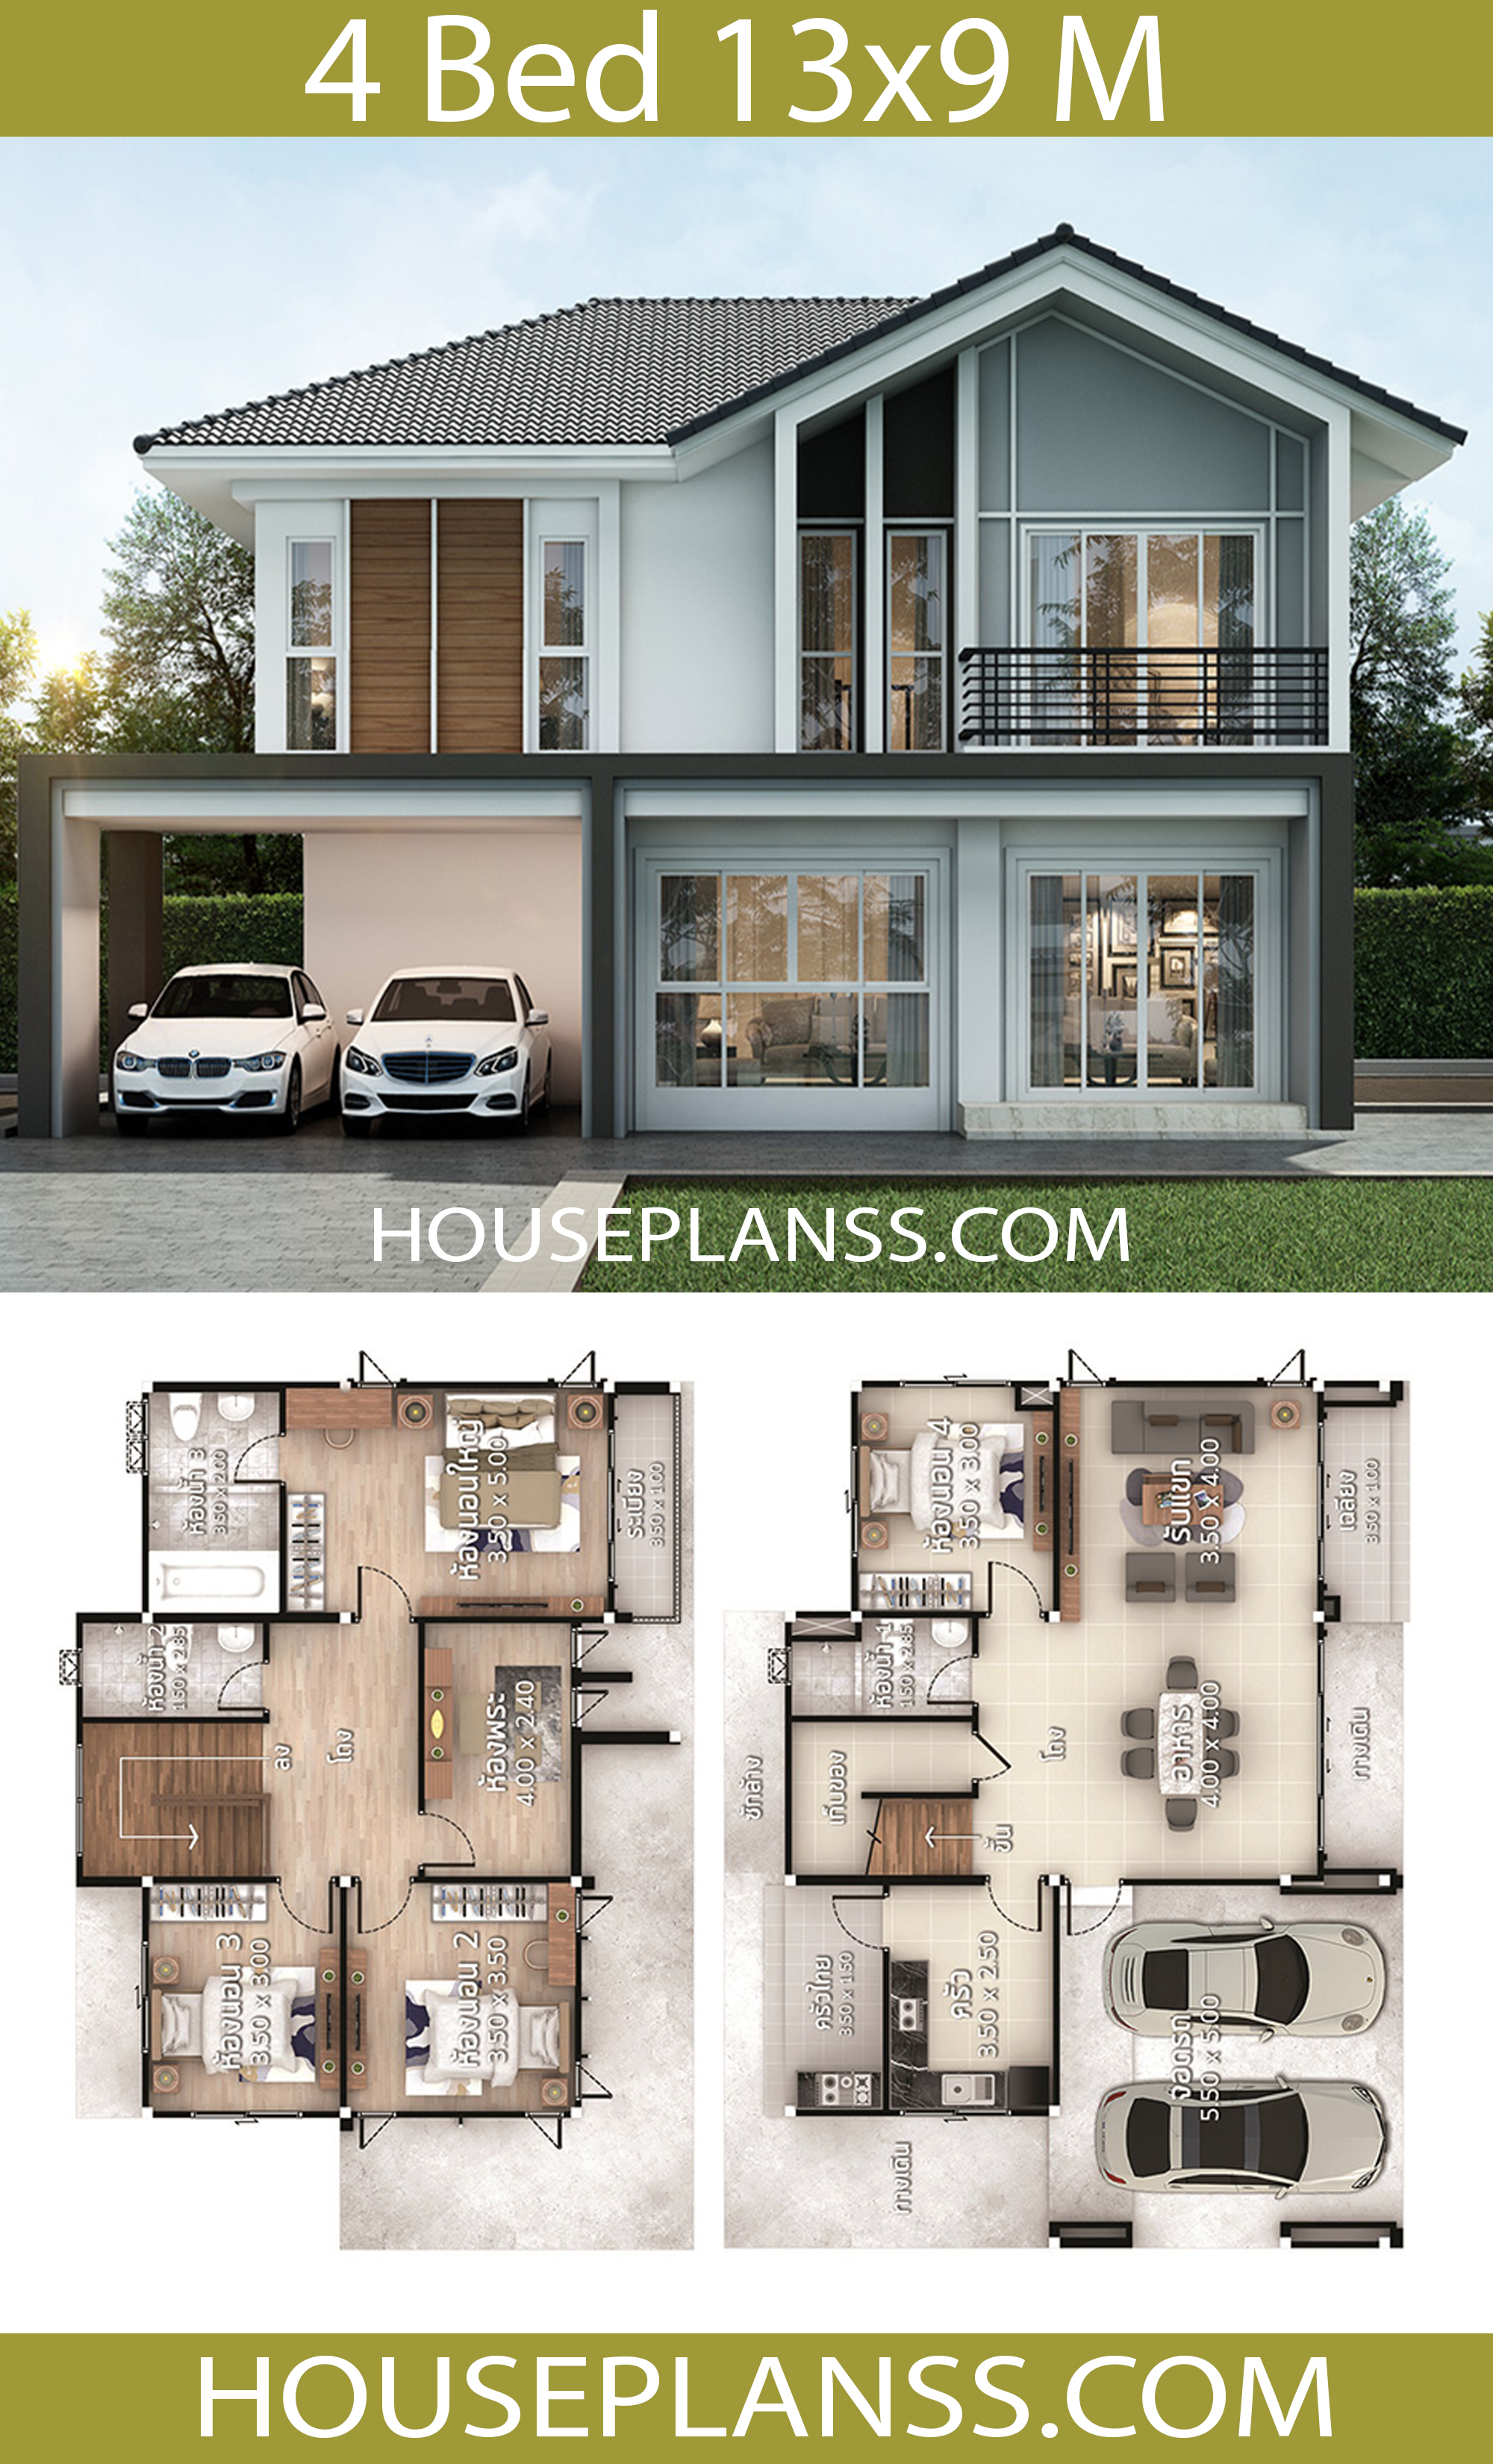 House Plans Idea 13x9 with 4 bedrooms - House Plans 3D